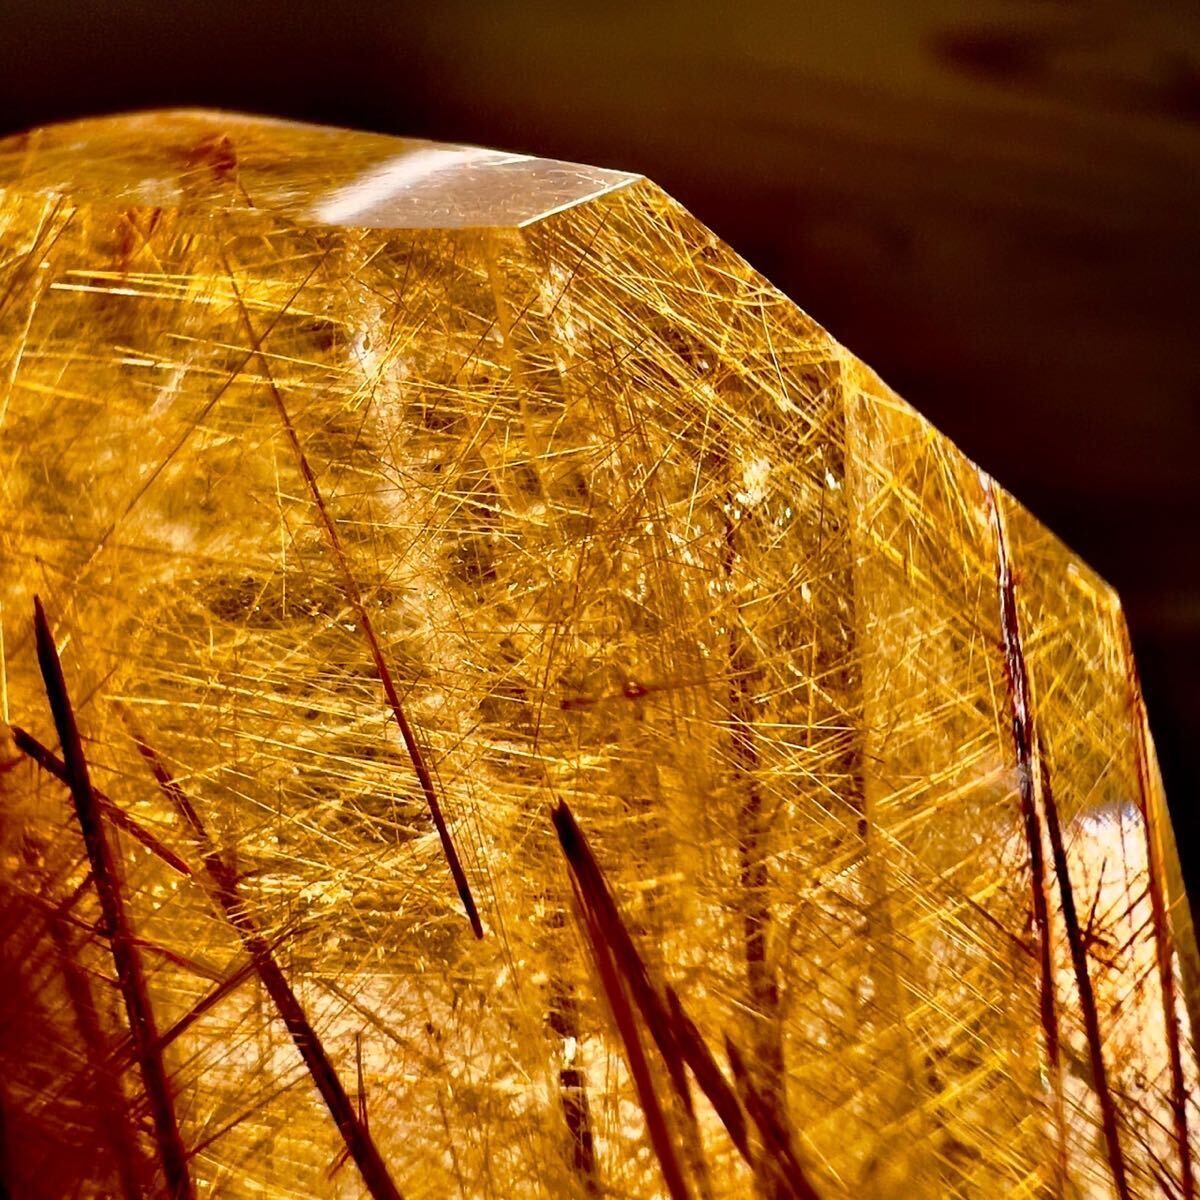 [himalaya crystal ] Gold rutile quartz rutile gold . stone crystal quartz crystal polish natural stone raw ore mineral mineral specimen stone 